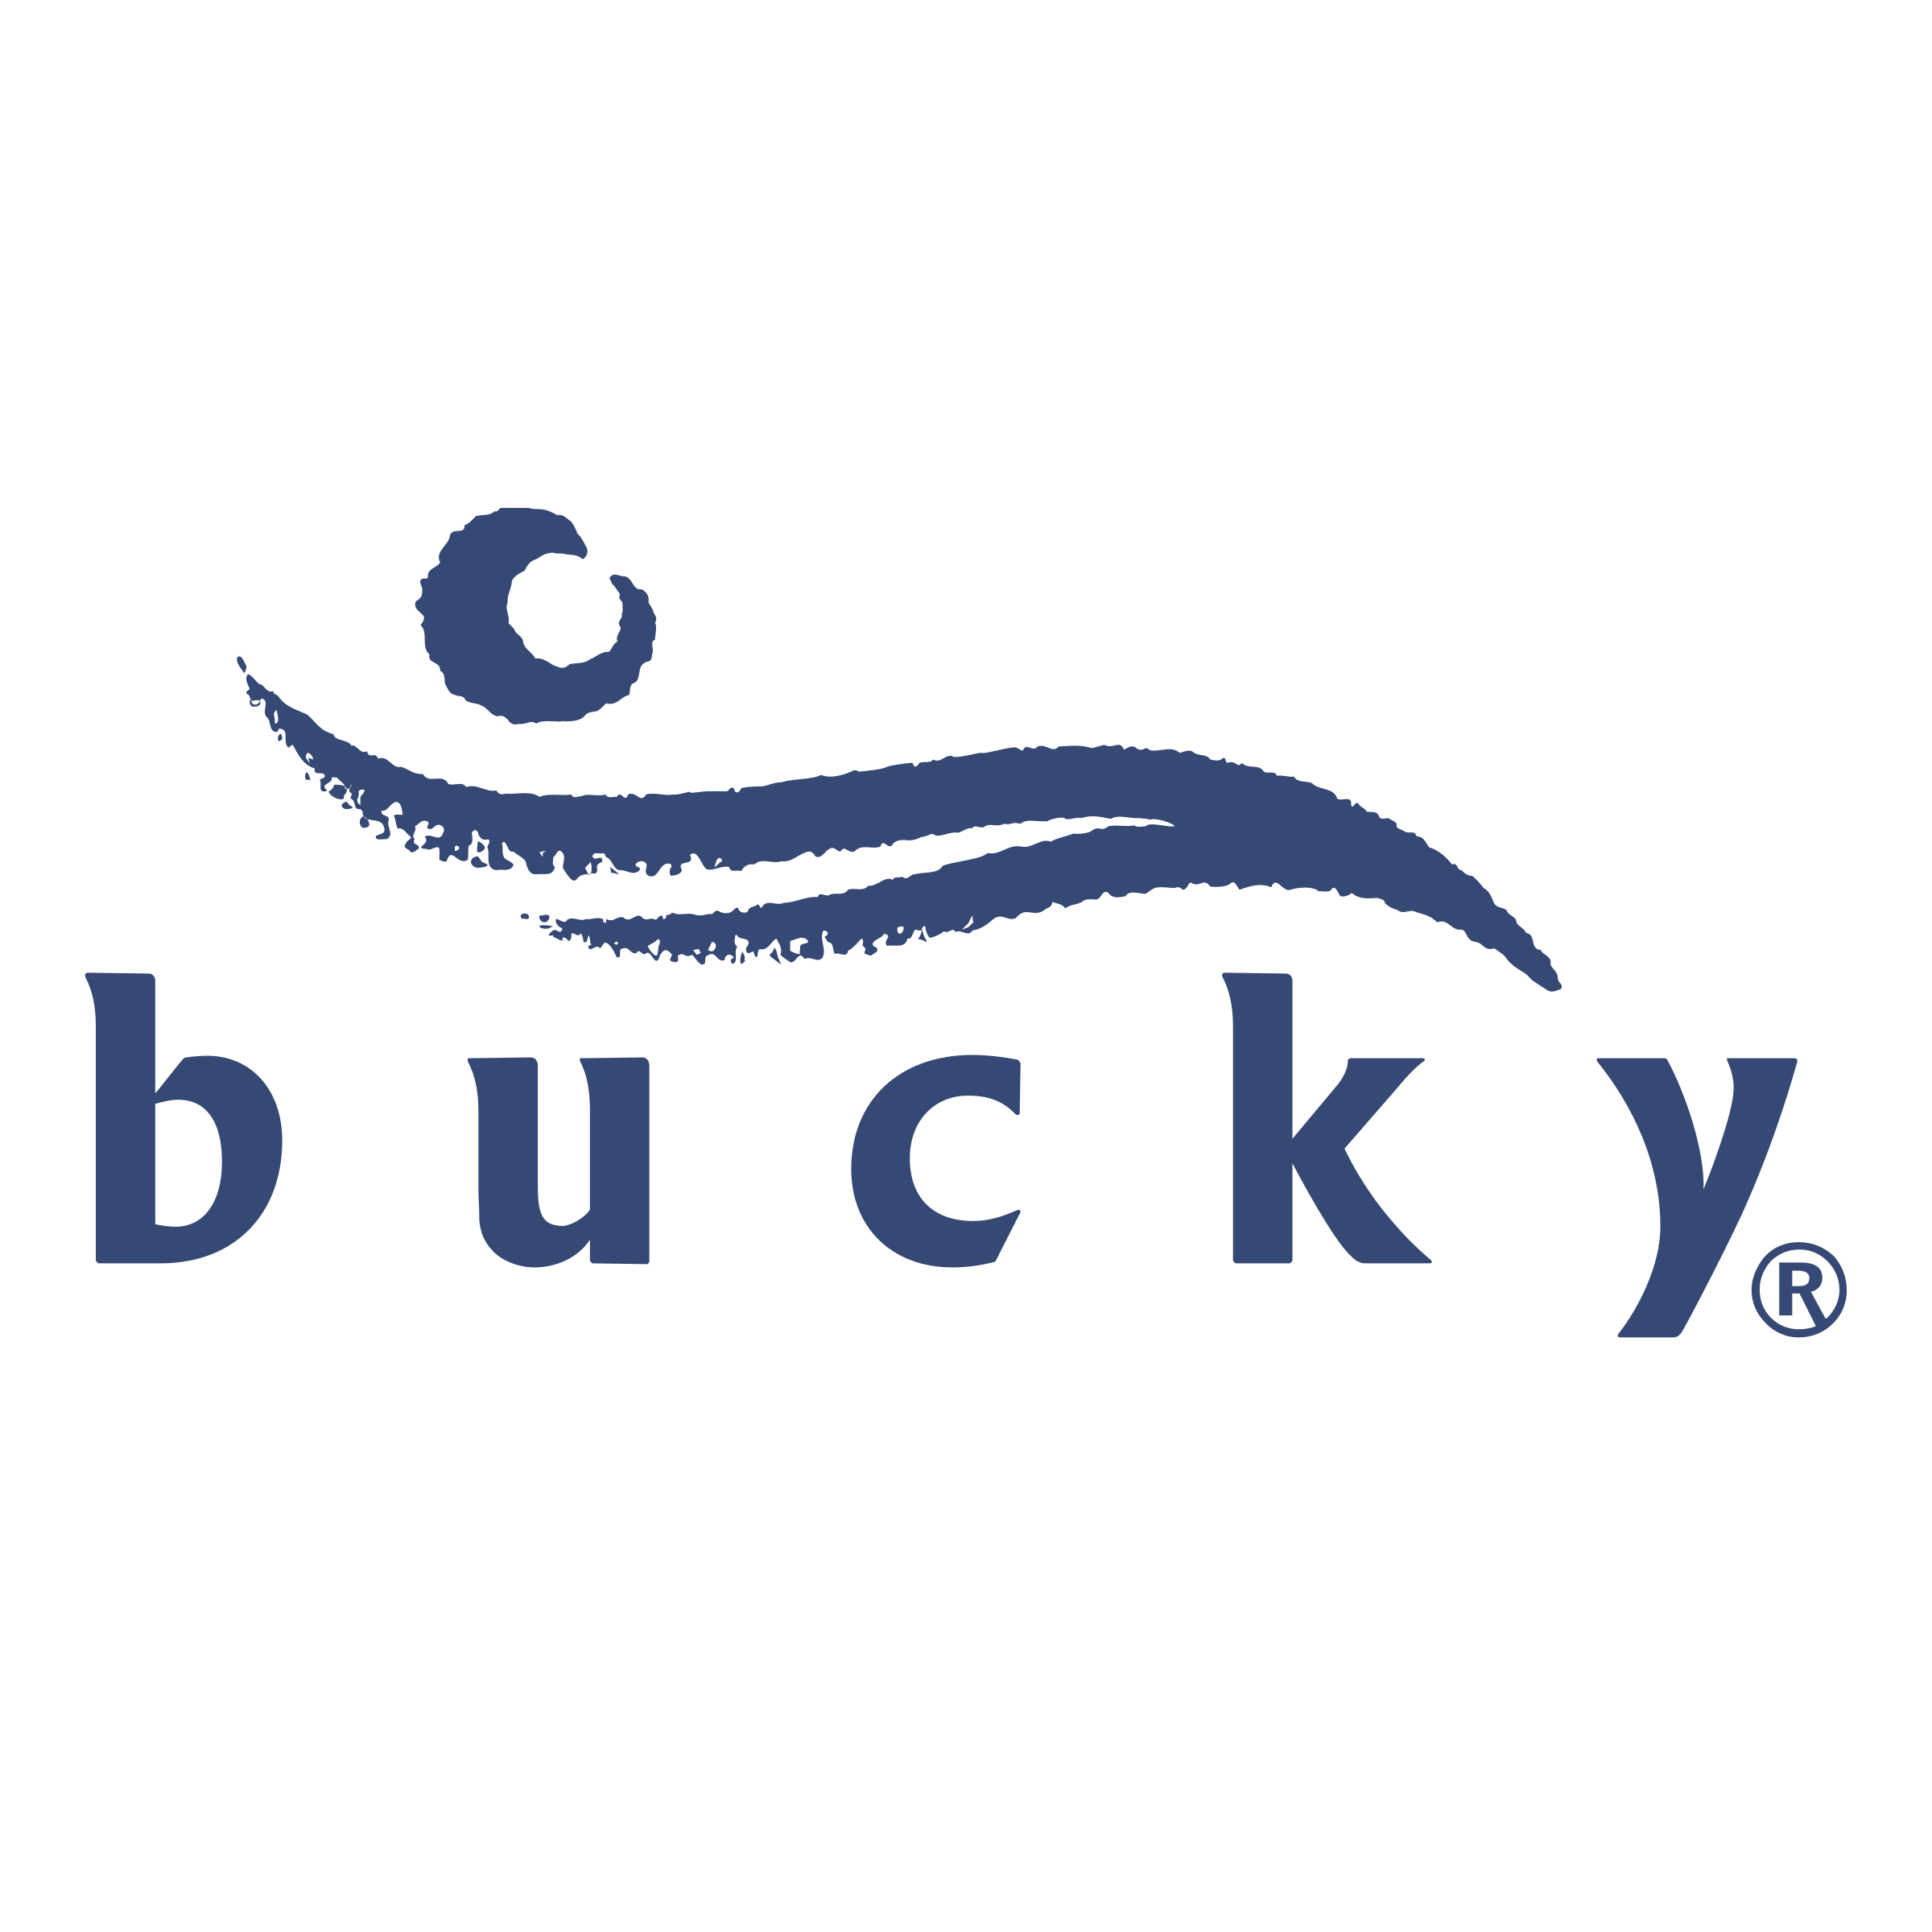 Bucky Logo - Bucky Logo PNG Transparent & SVG Vector